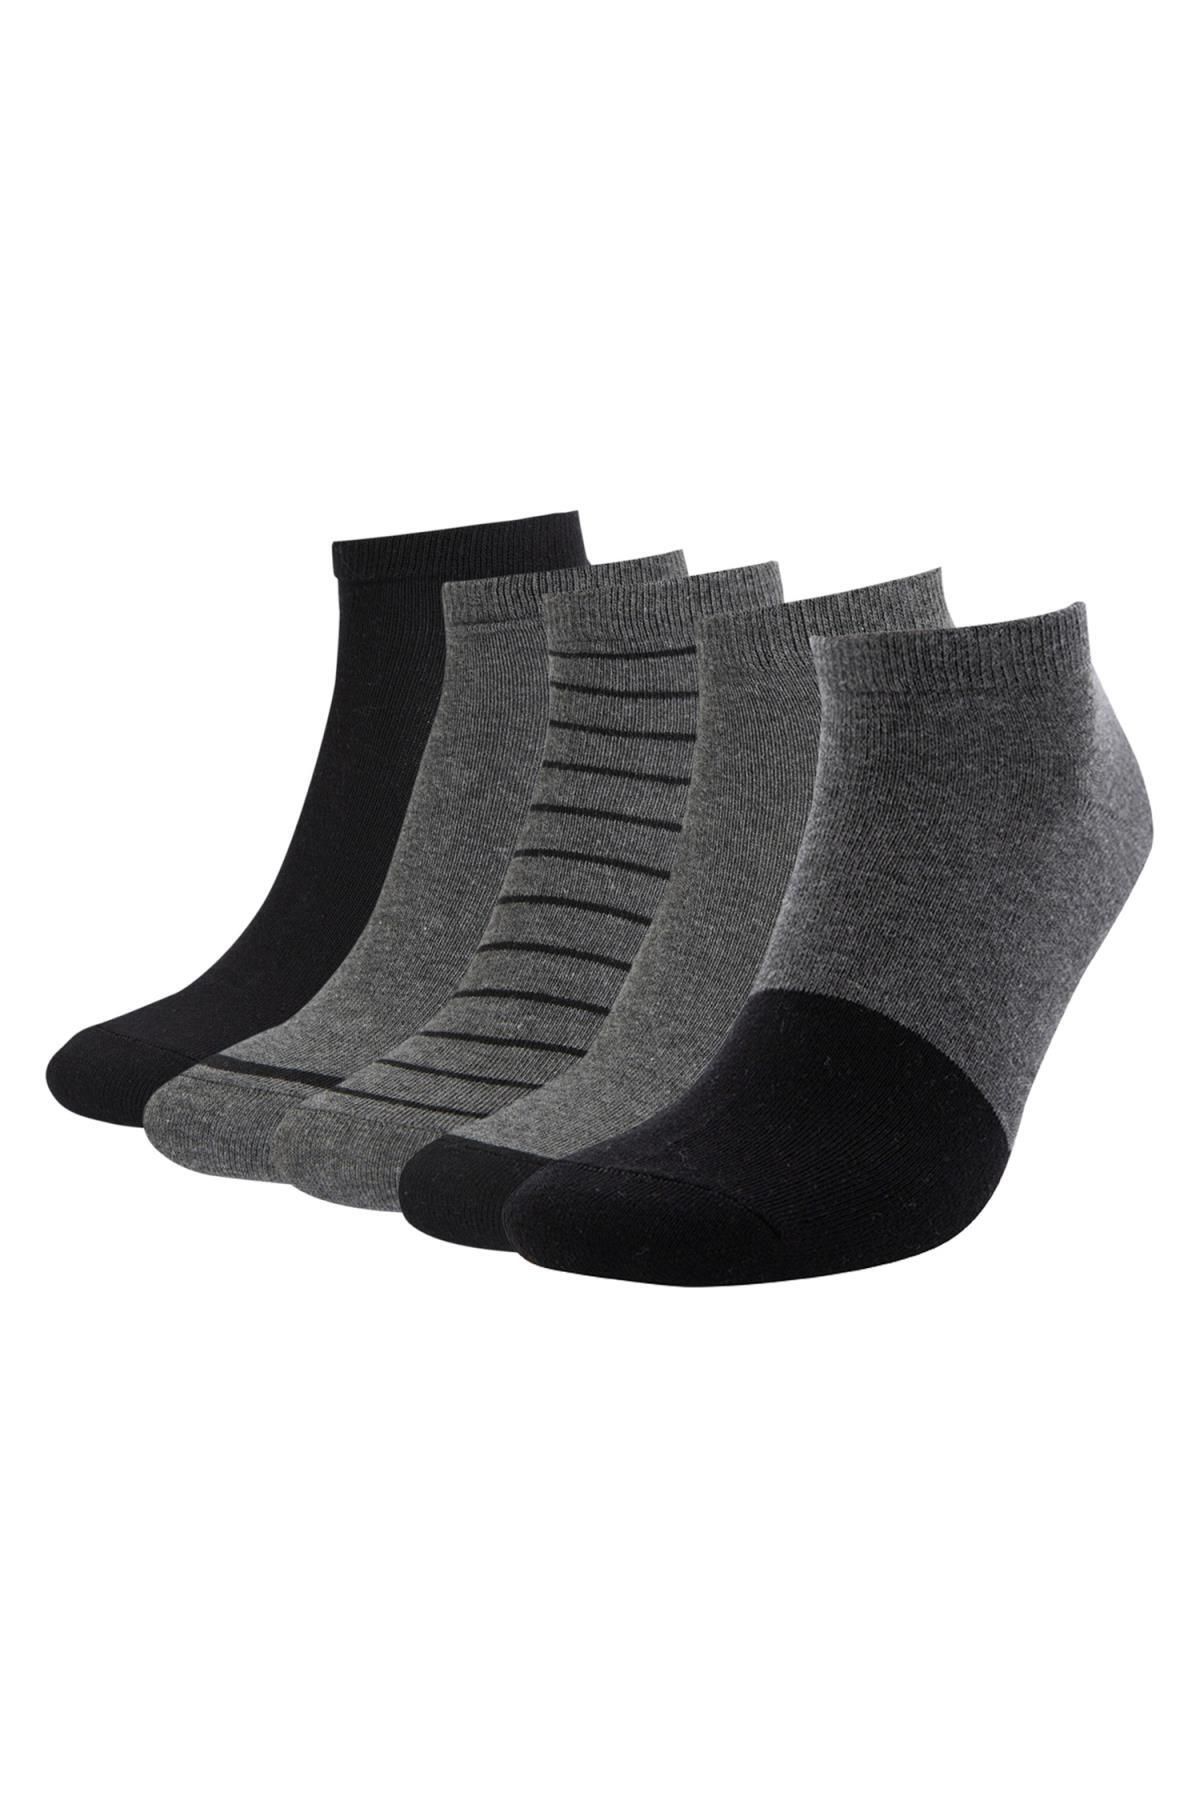 Defacto Erkek Desenli 5li Patik Çorap R8650azns